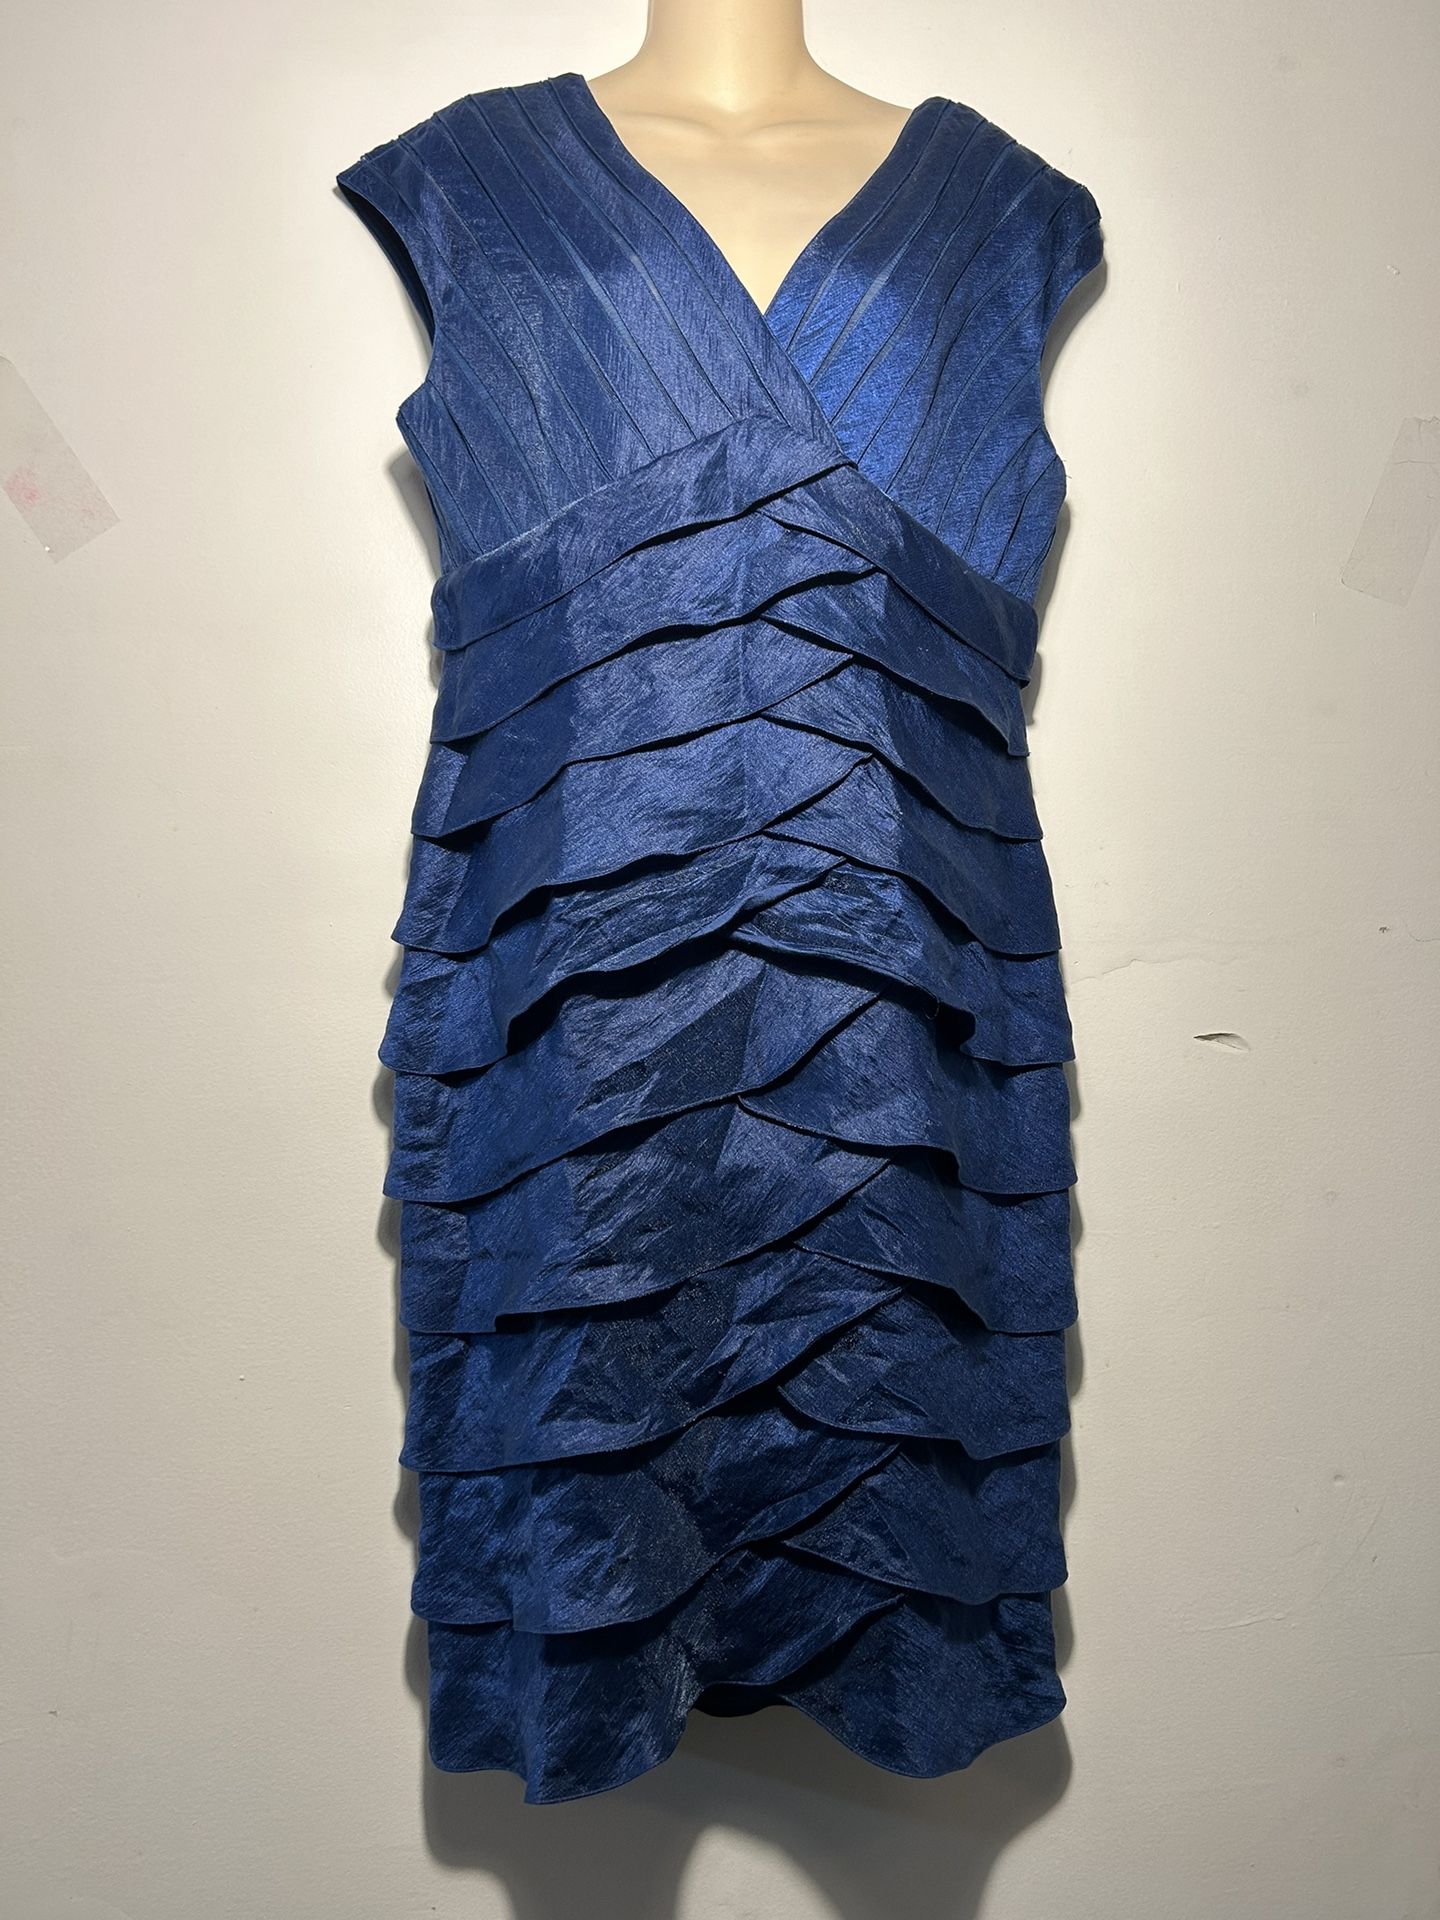 Women's dress, electric color.Size 14. $35.